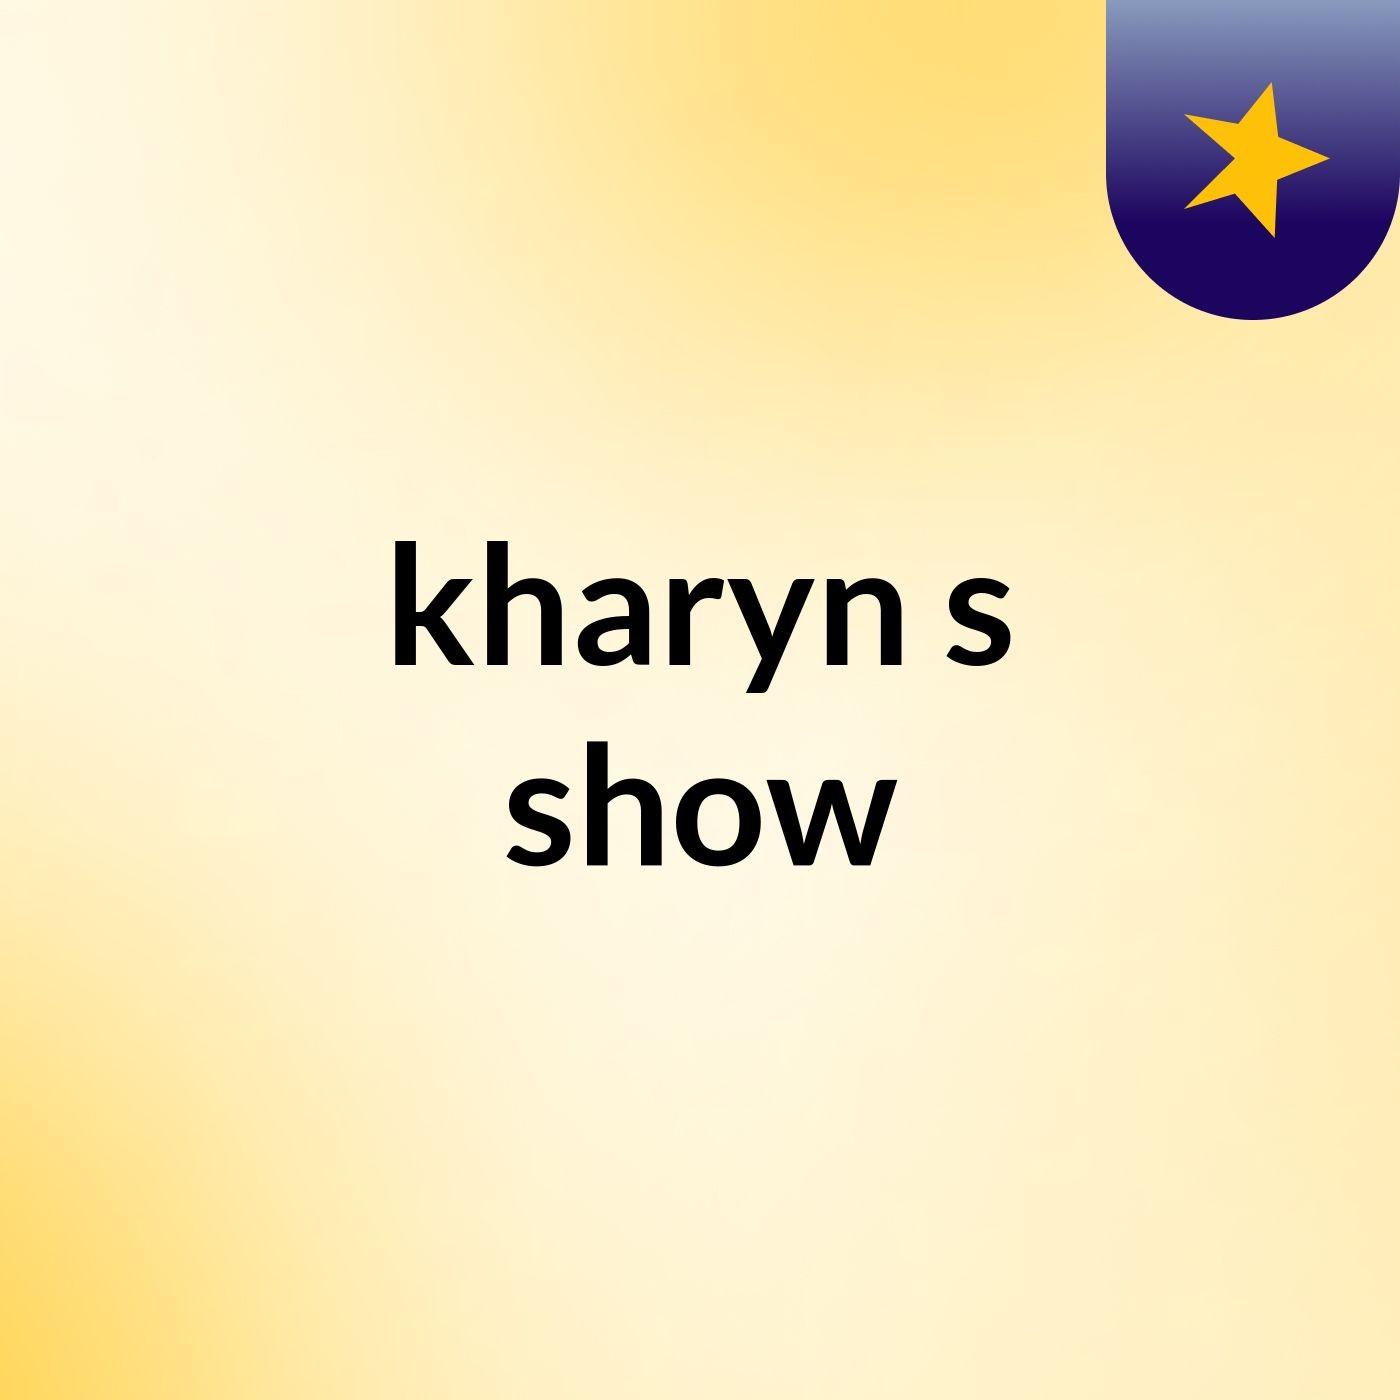 kharyn's show